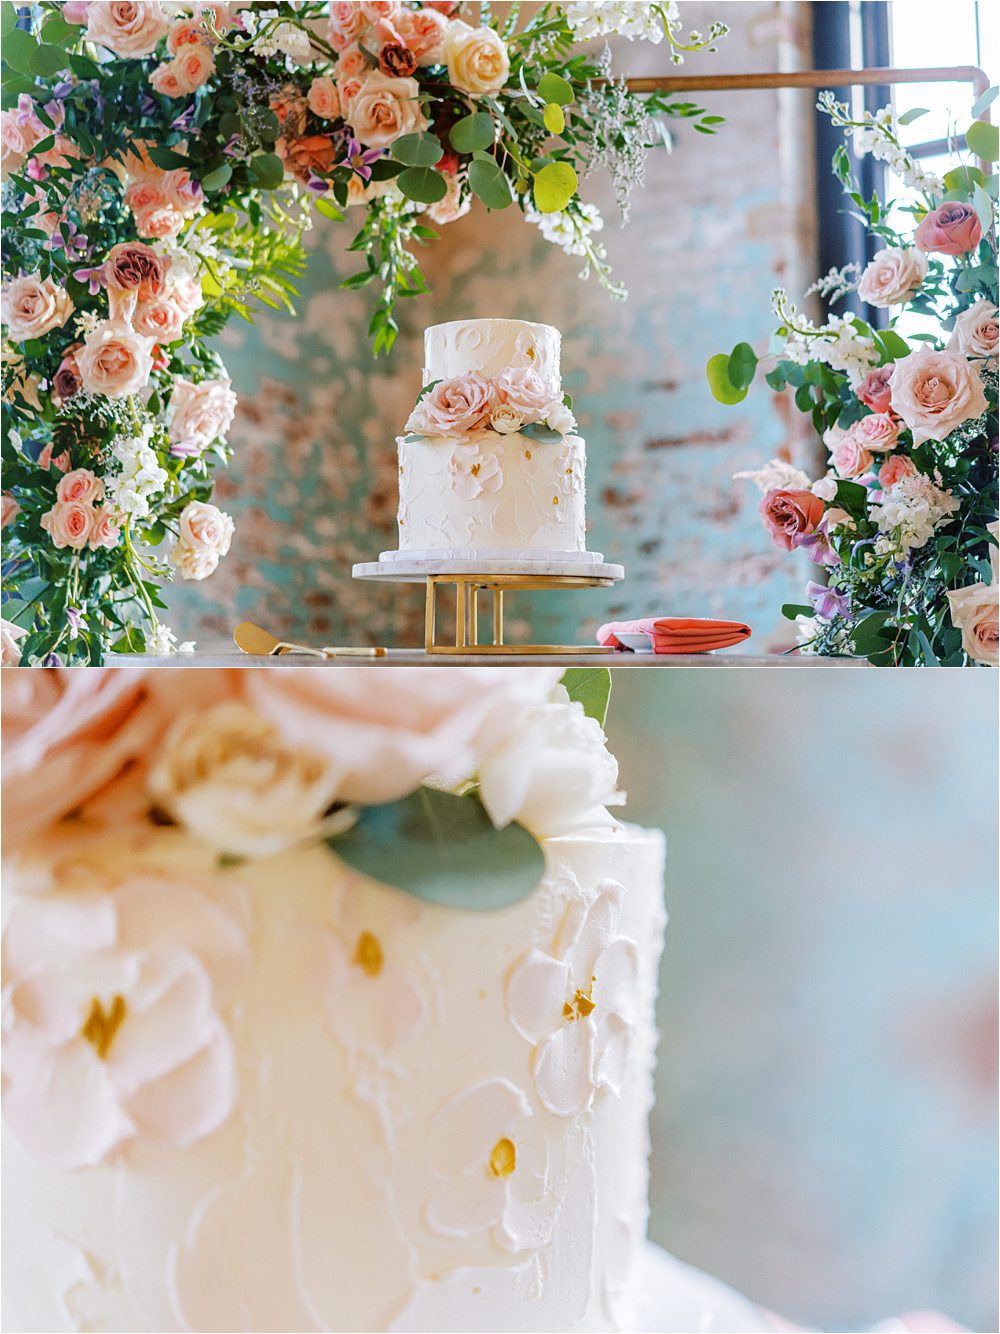 Incredible floral wedding cake 